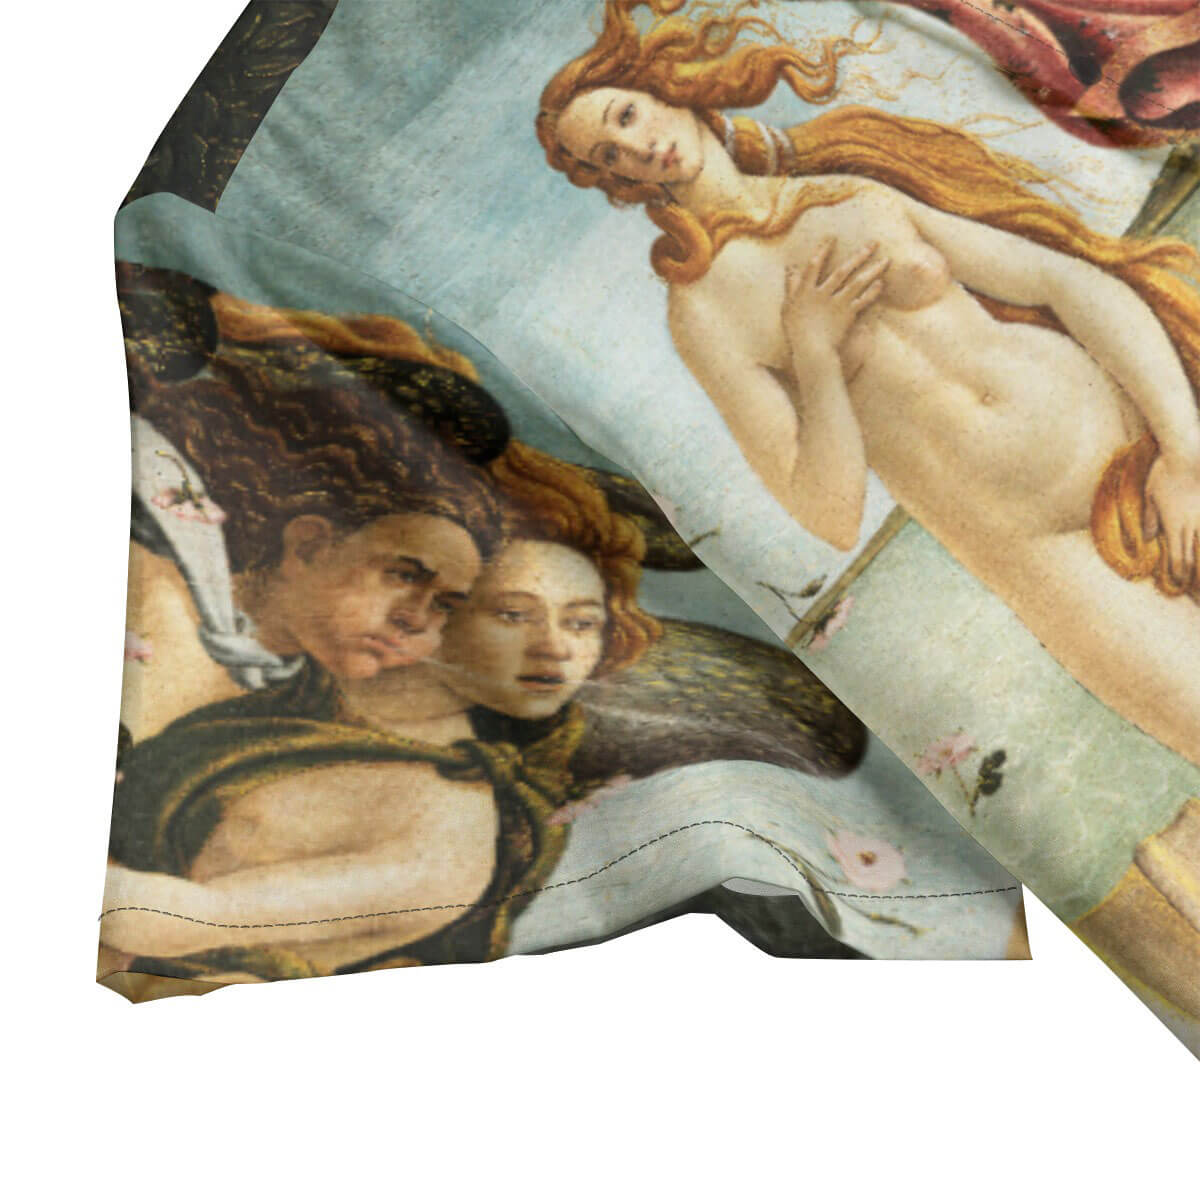 Art enthusiast wearing Birth of Venus shirt at museum